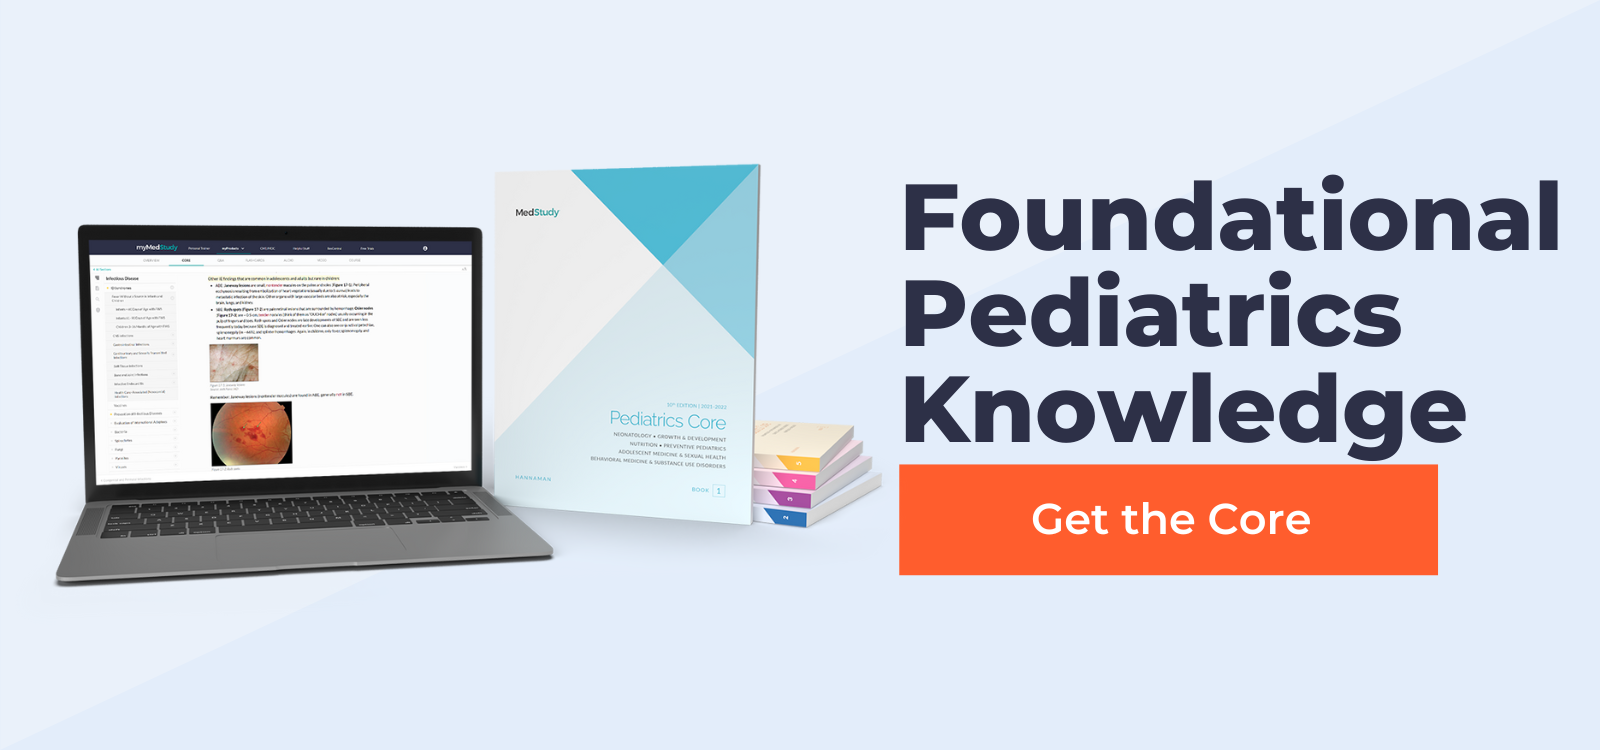 foundational pediatrics knowledge get the core